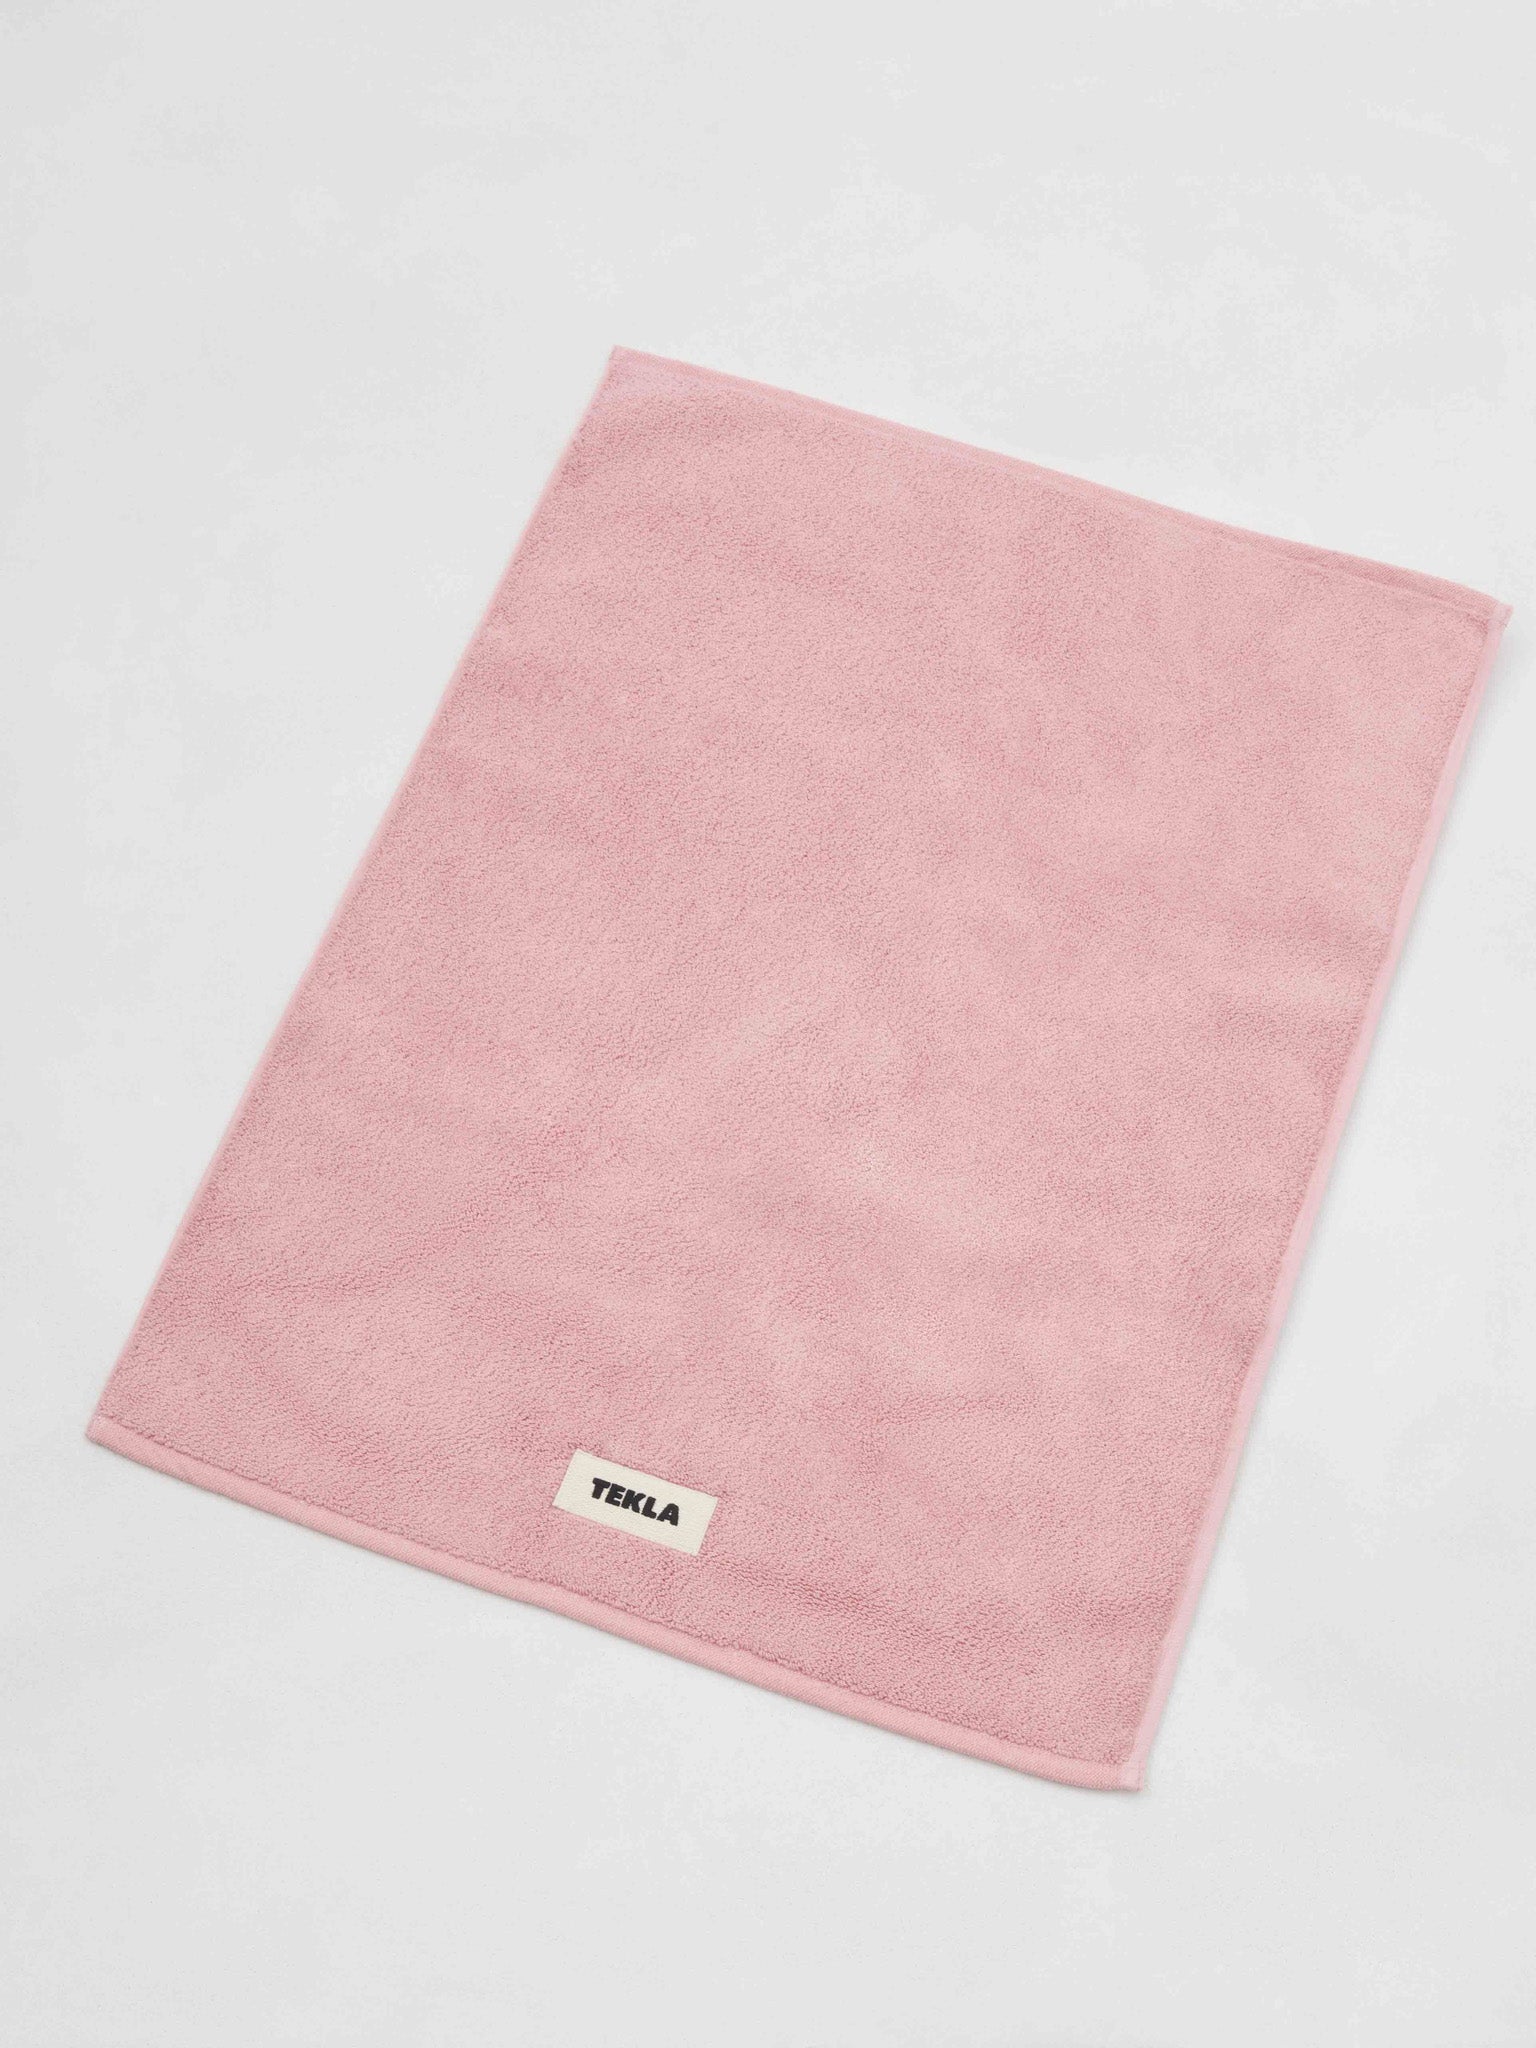 Tekla - Bath Mat in Shaded Pink